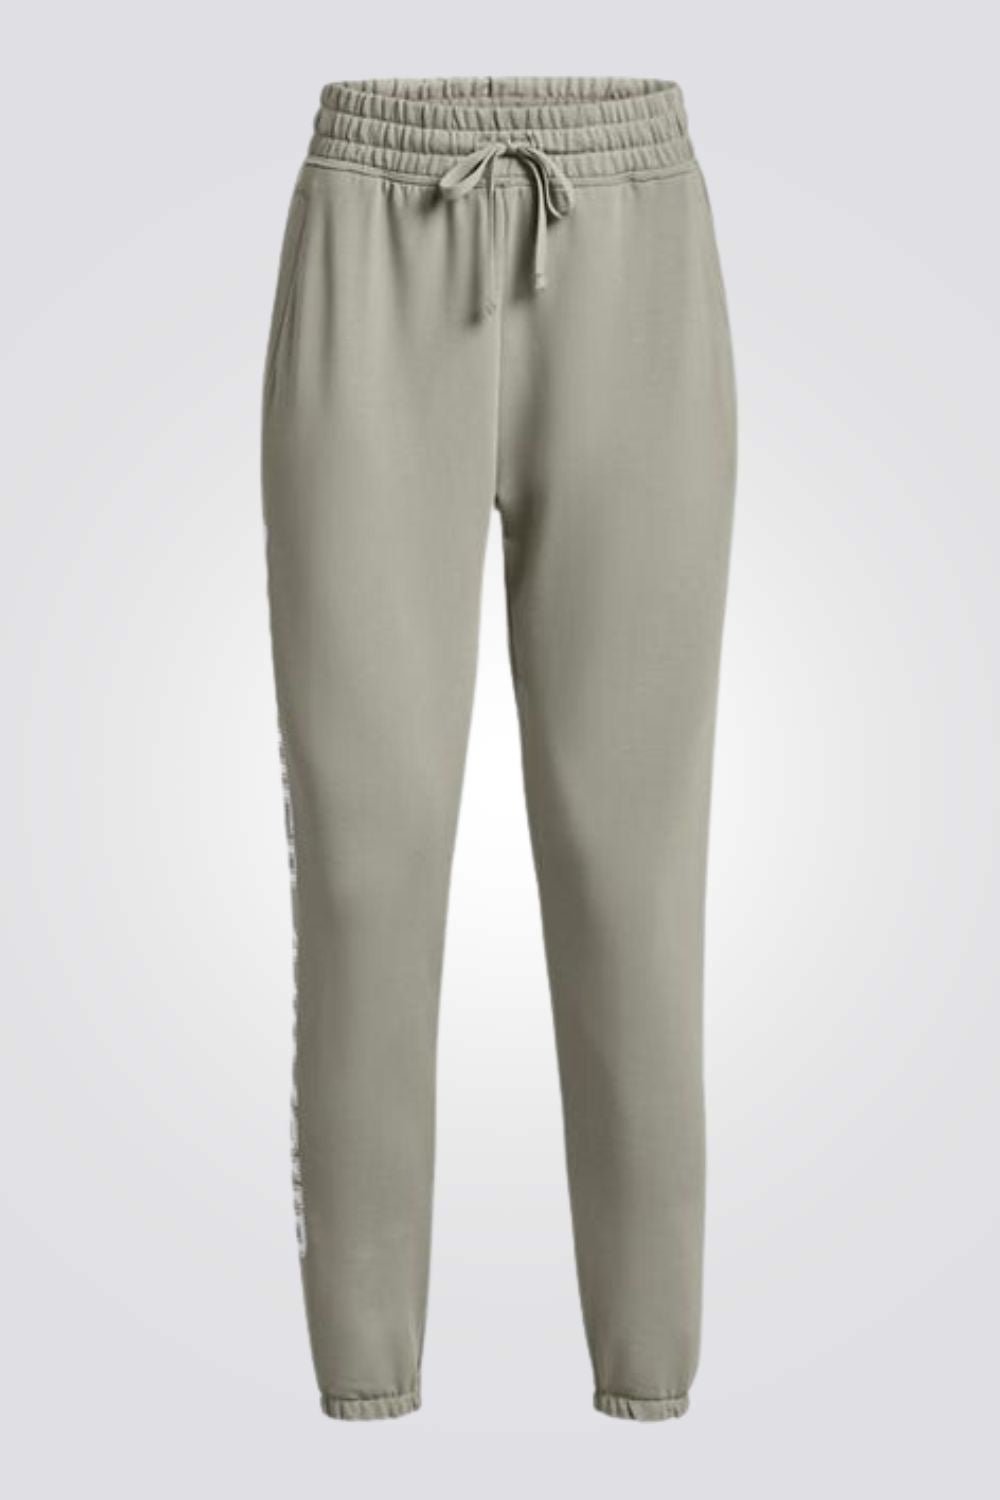 UNDER ARMOUR - מכנסי ספורט ארוכים לנשים בצבע זית - MASHBIR//365